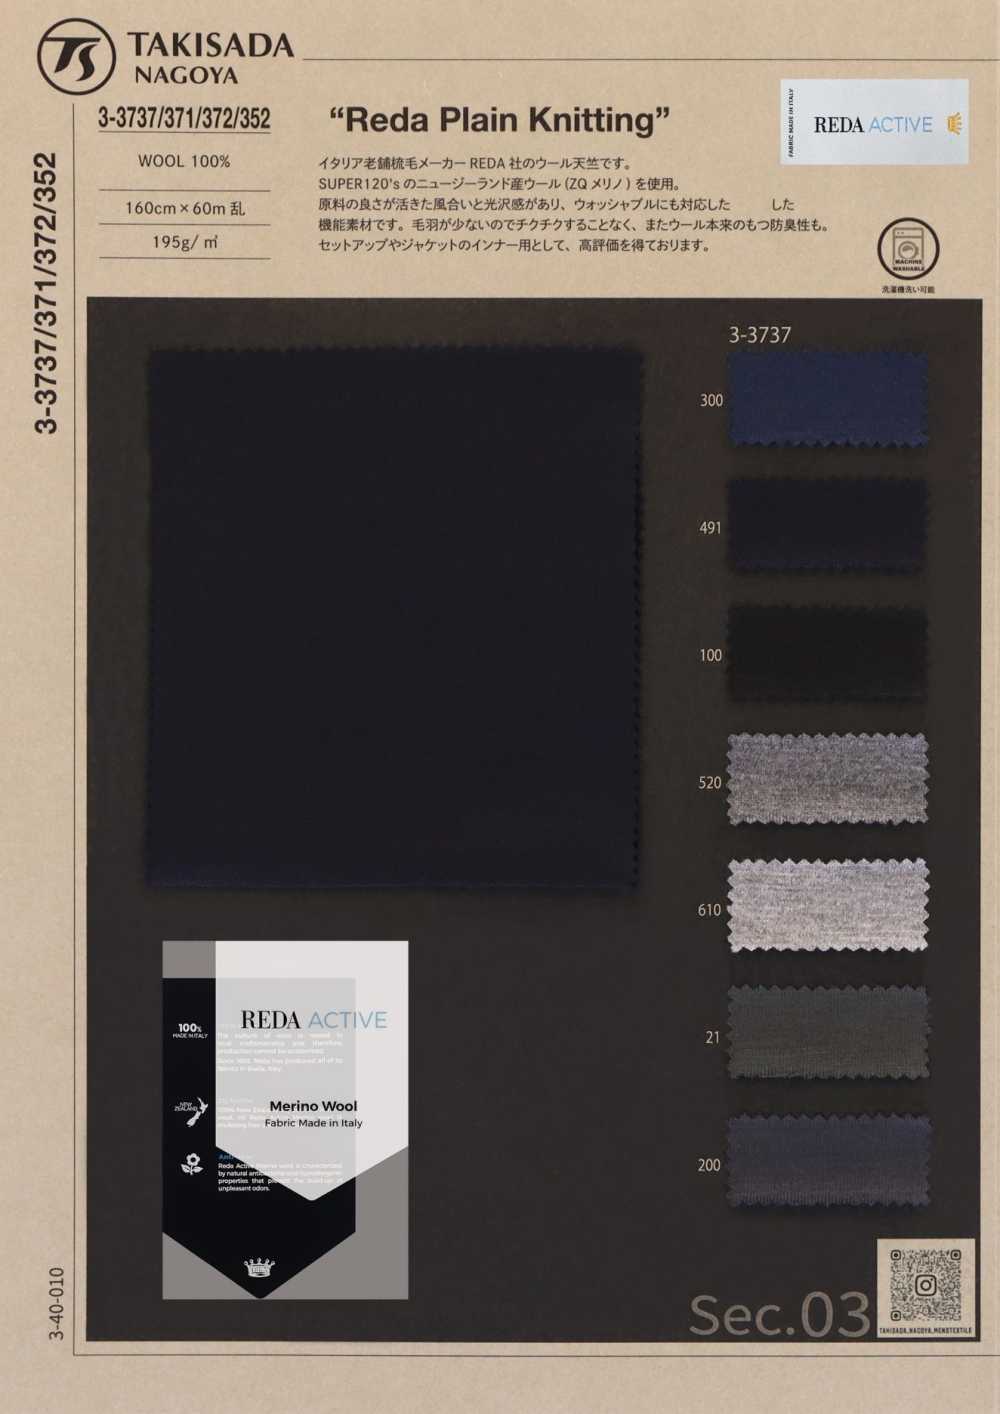 3-3737 REDA ACTIVE Maille Laine Unie[Fabrication De Textile] Takisada Nagoya